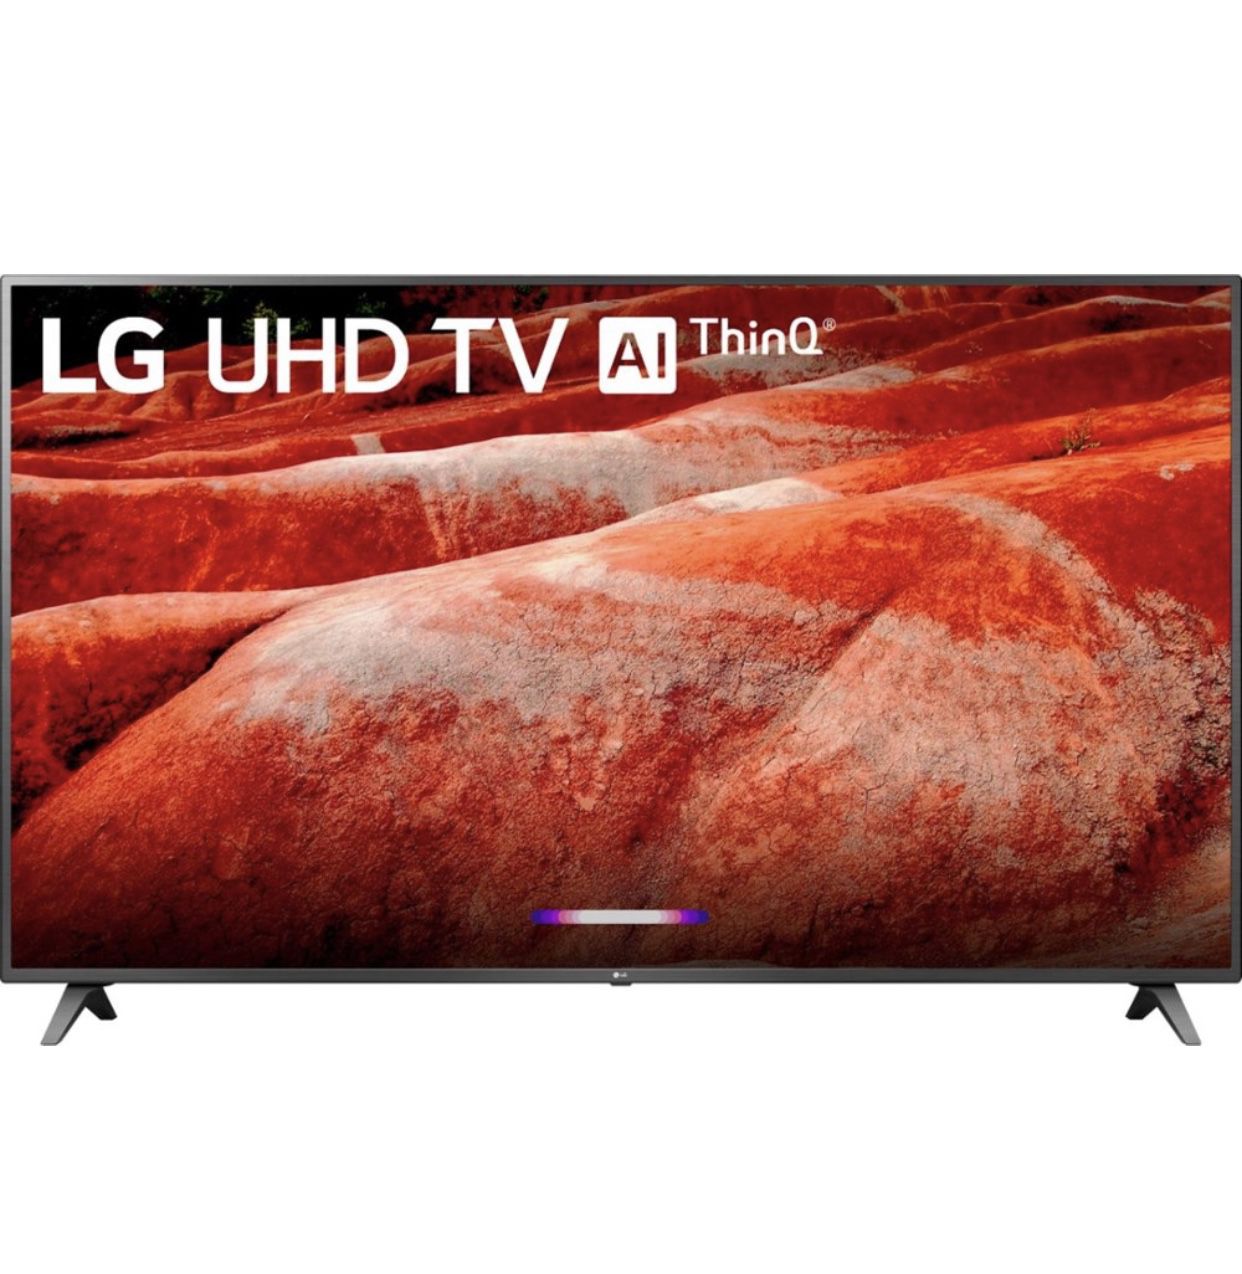 LG - 82" Class - LED - UM8070PUA Series - 2160p - Smart - 4K UHD TV with HDR